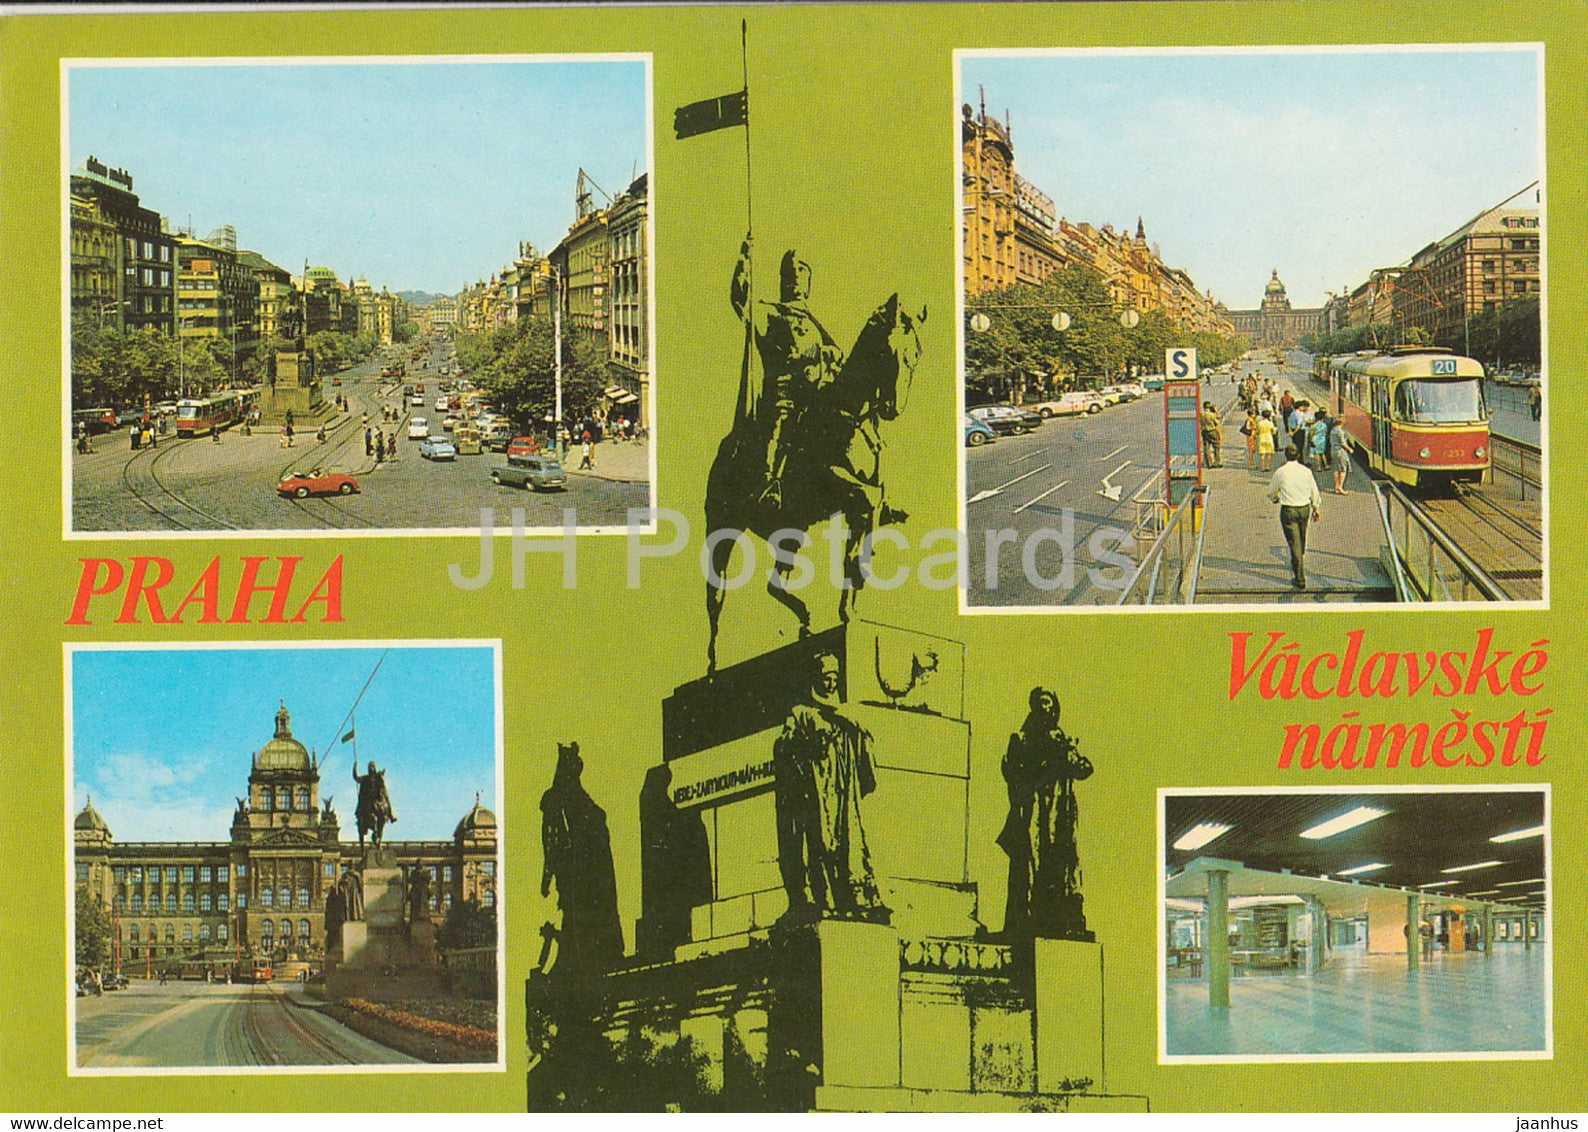 Praha - Prague - Wenceslas square - tram - Czechoslovakia - Czech Republic - unused - JH Postcards